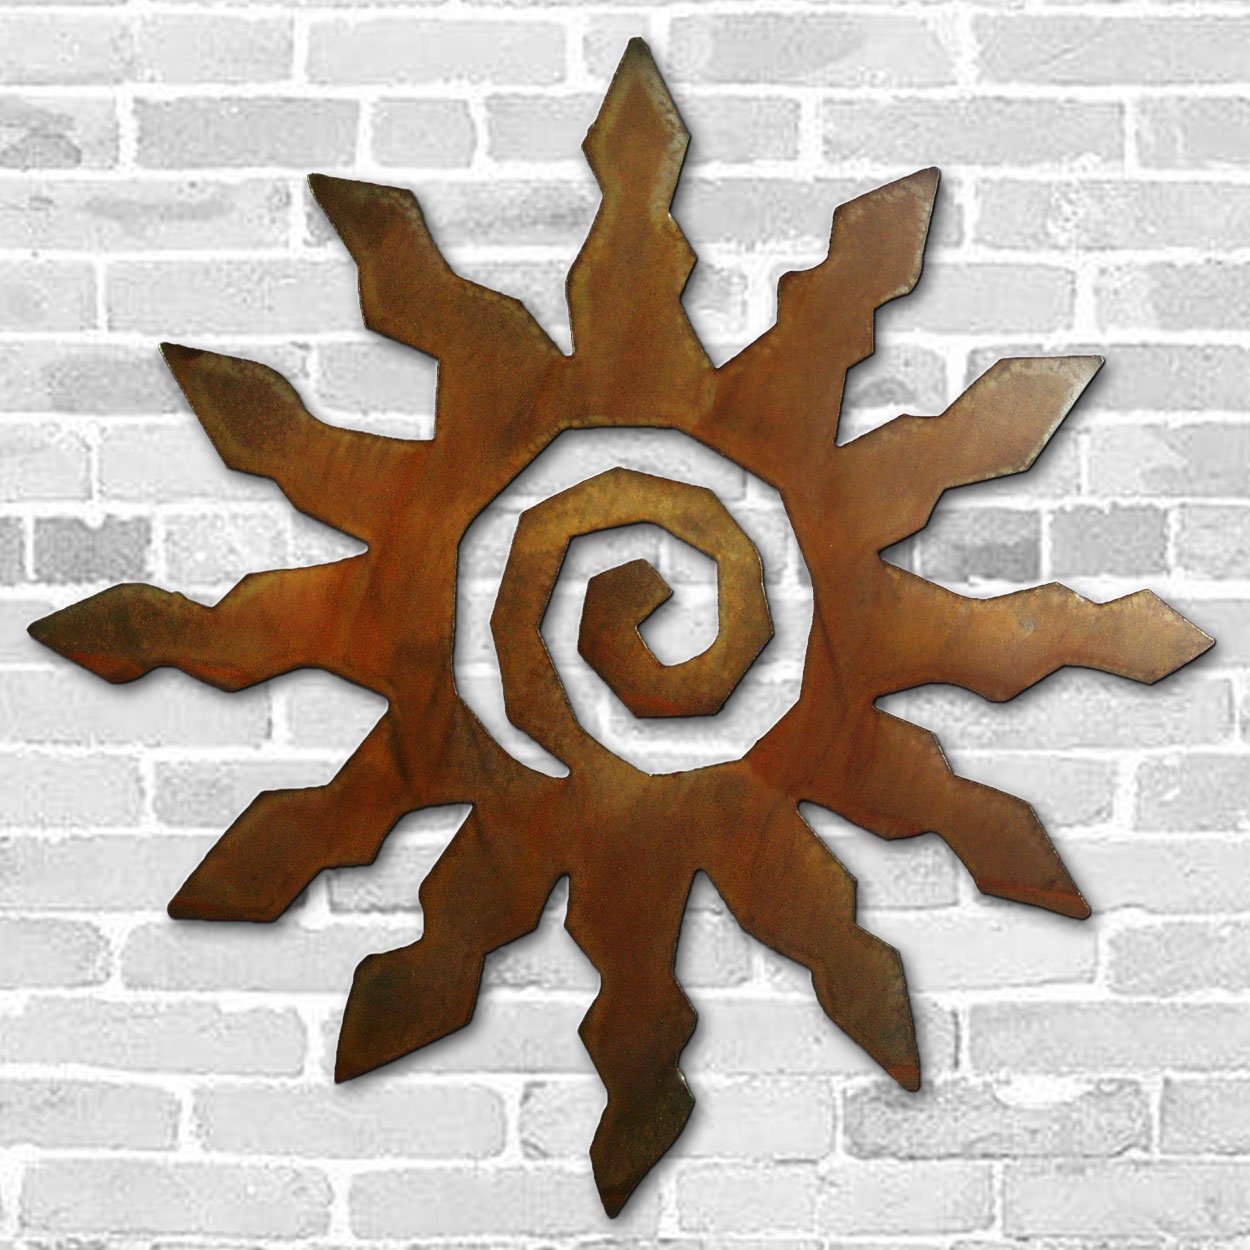 165155 - 36in Jumbo 12-Ray Spiral Sun Crooks Designs Floating Metal Wall Art in Rust Finish